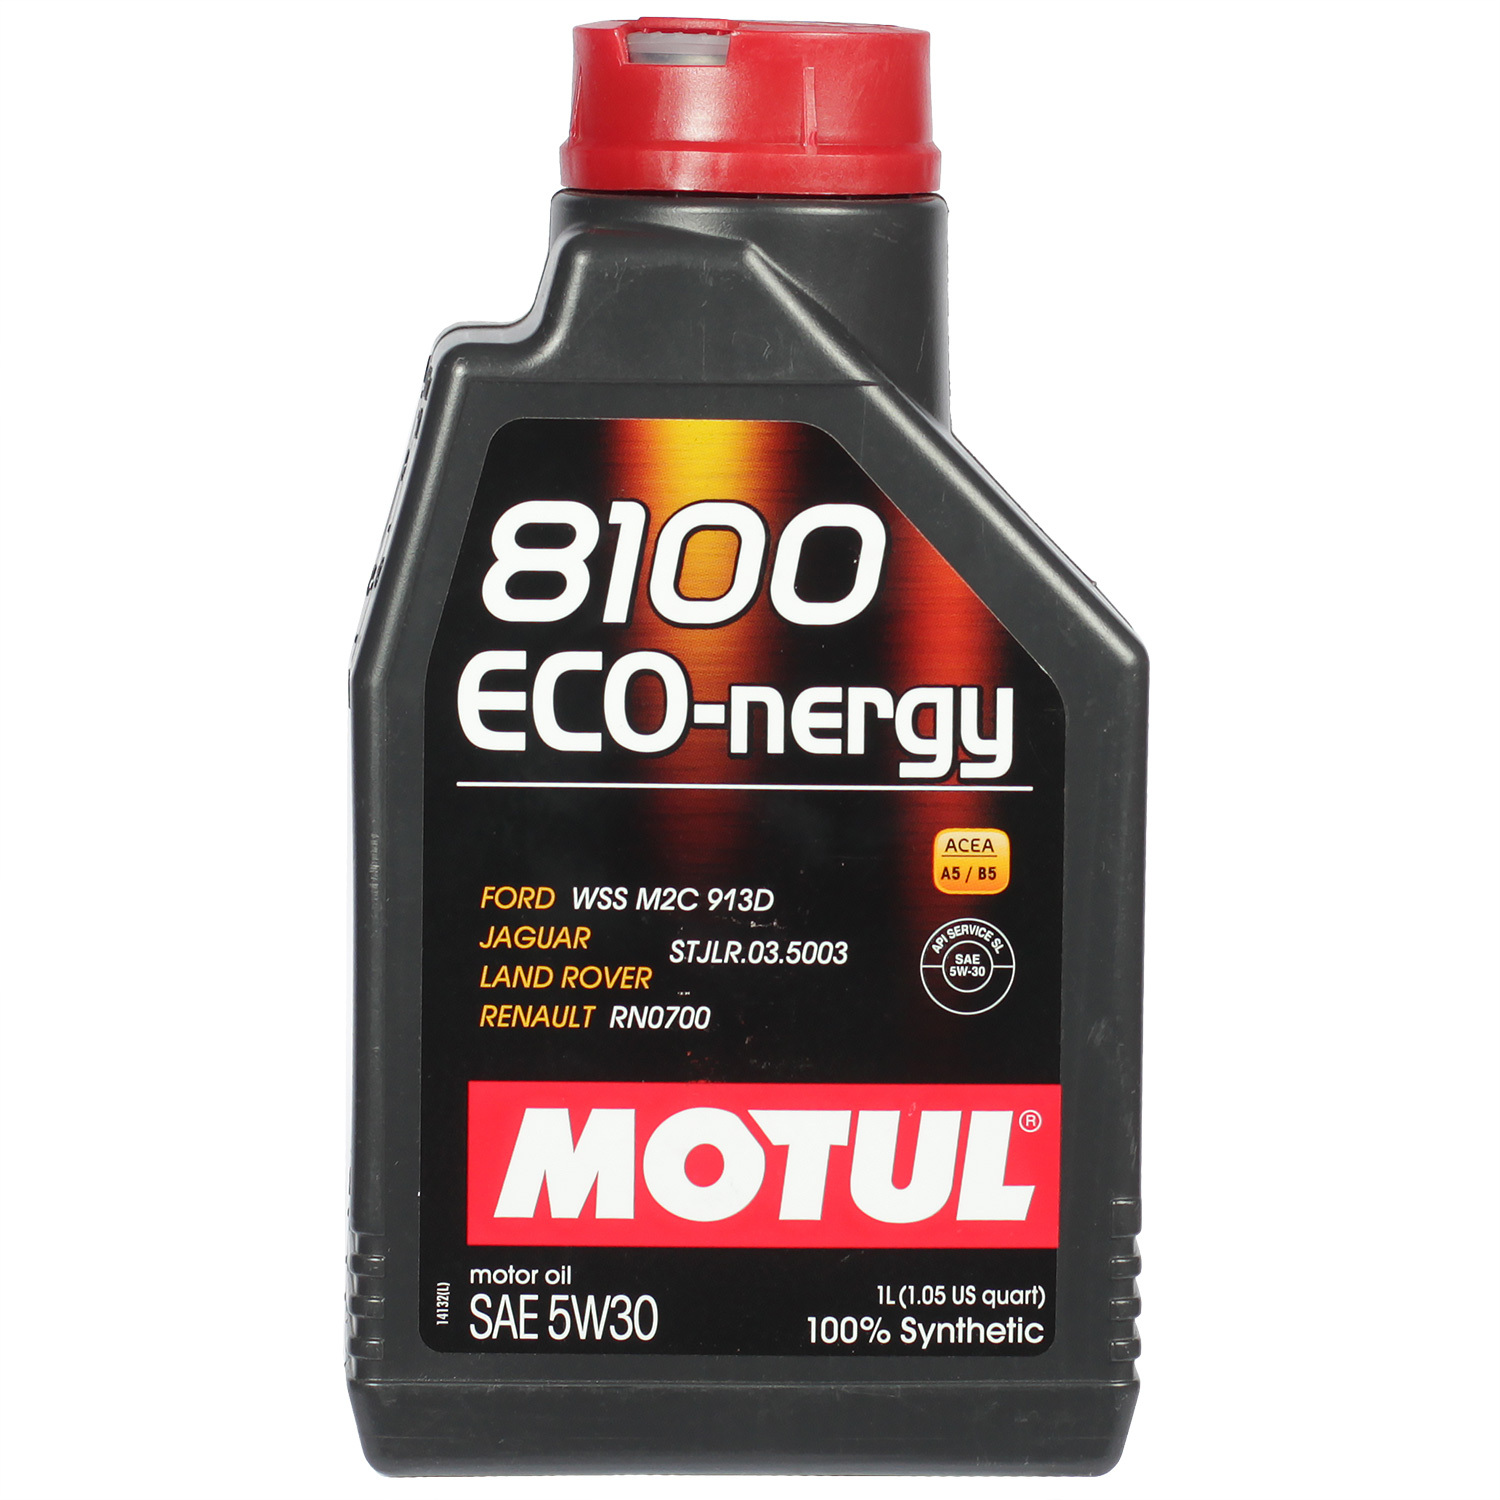 Motul Моторное масло Motul 8100 Eco-nergy 5W-30, 1 л масло моторное motul 8100 eco nergy 0w 30 синтетическое 208 л